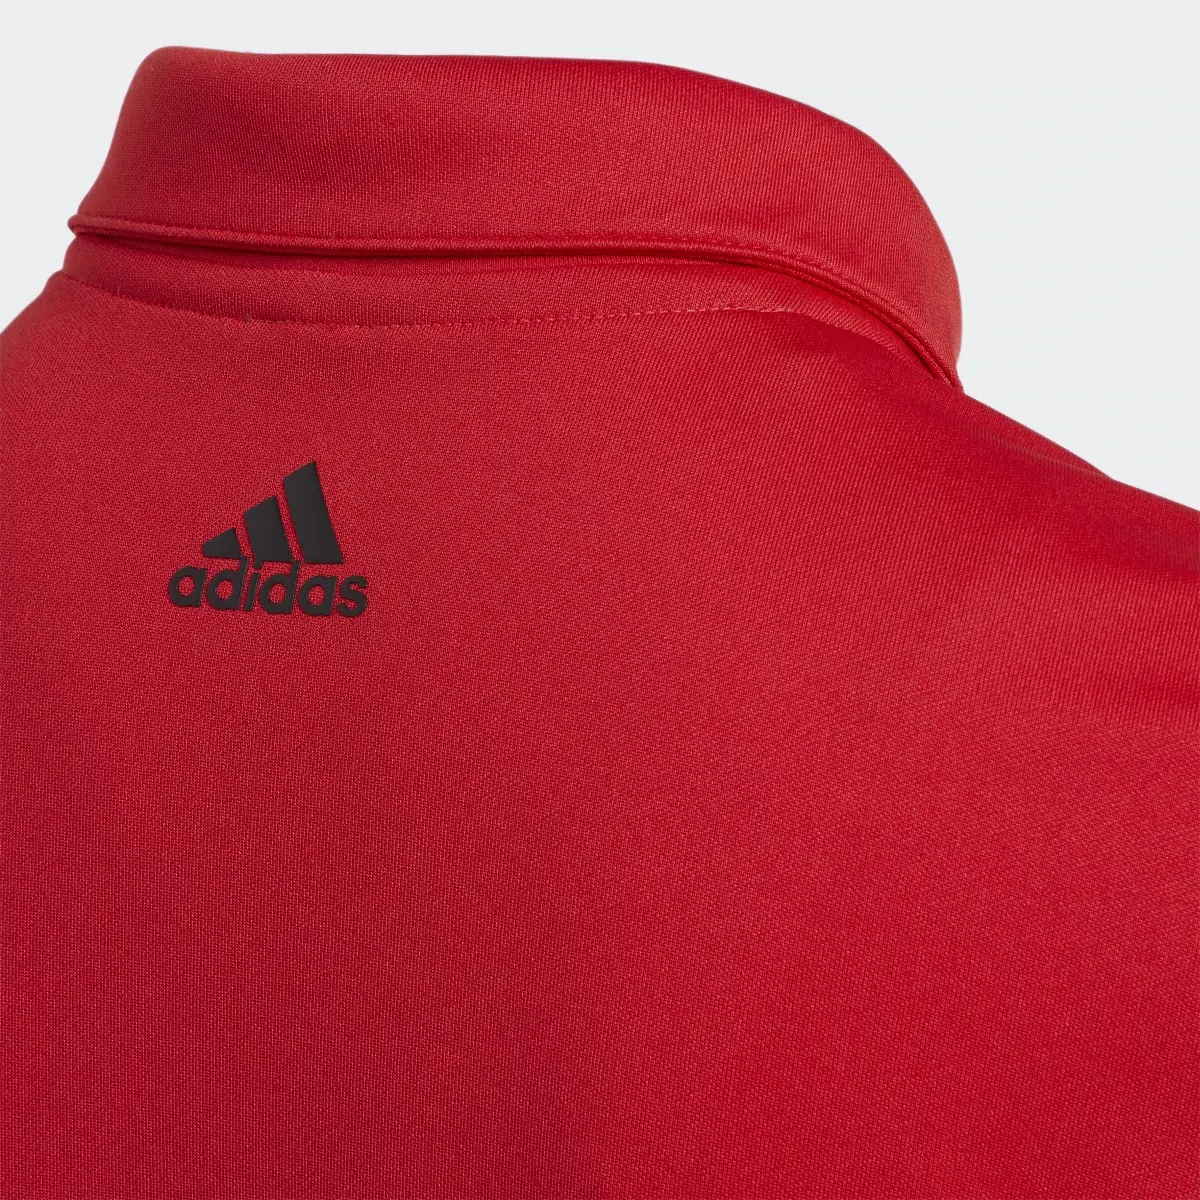 Adidas 3-Stripes Golf Polo Shirt. 3